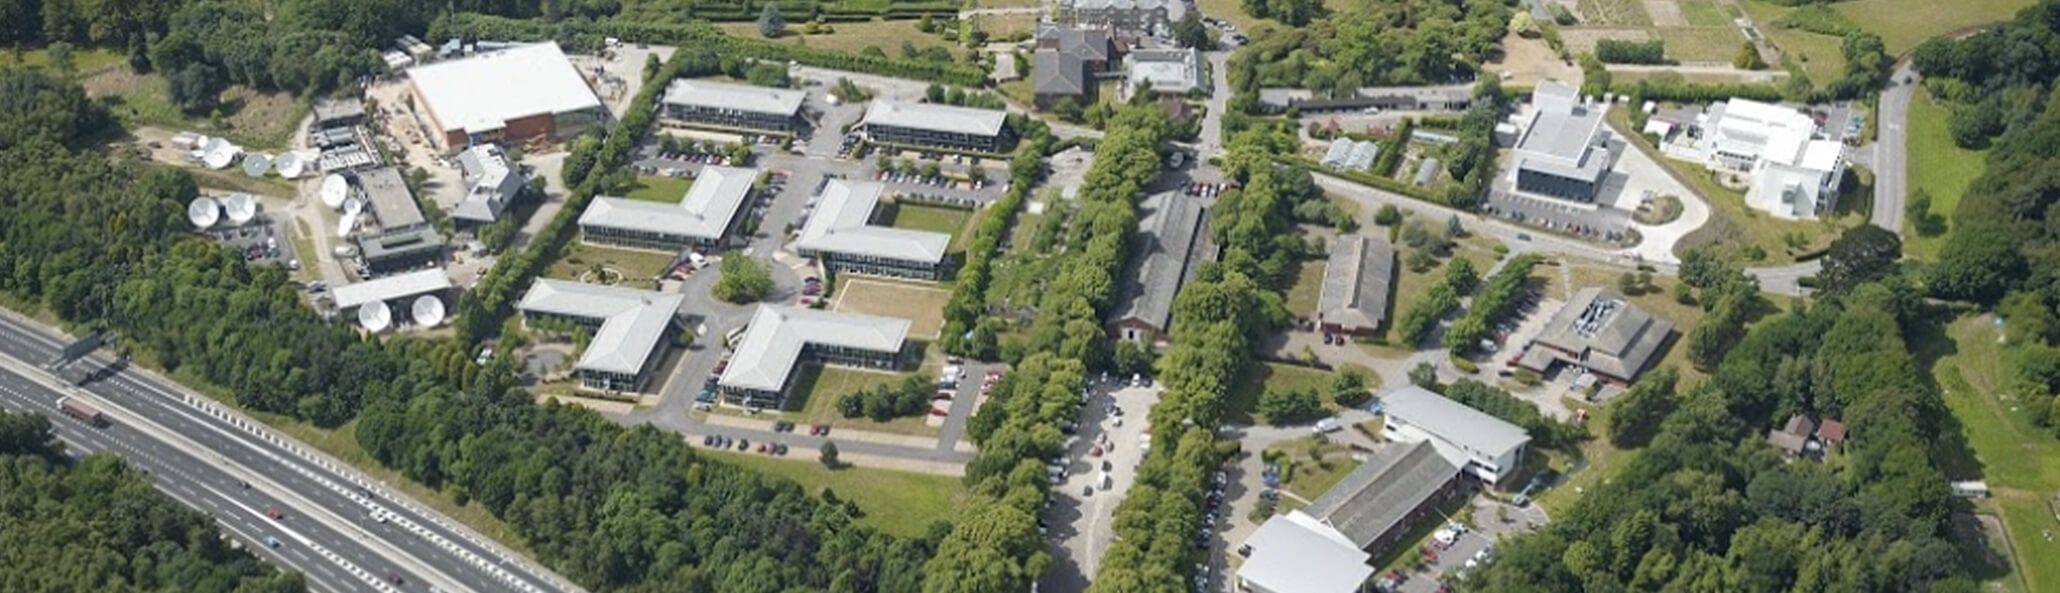 science park aerial view